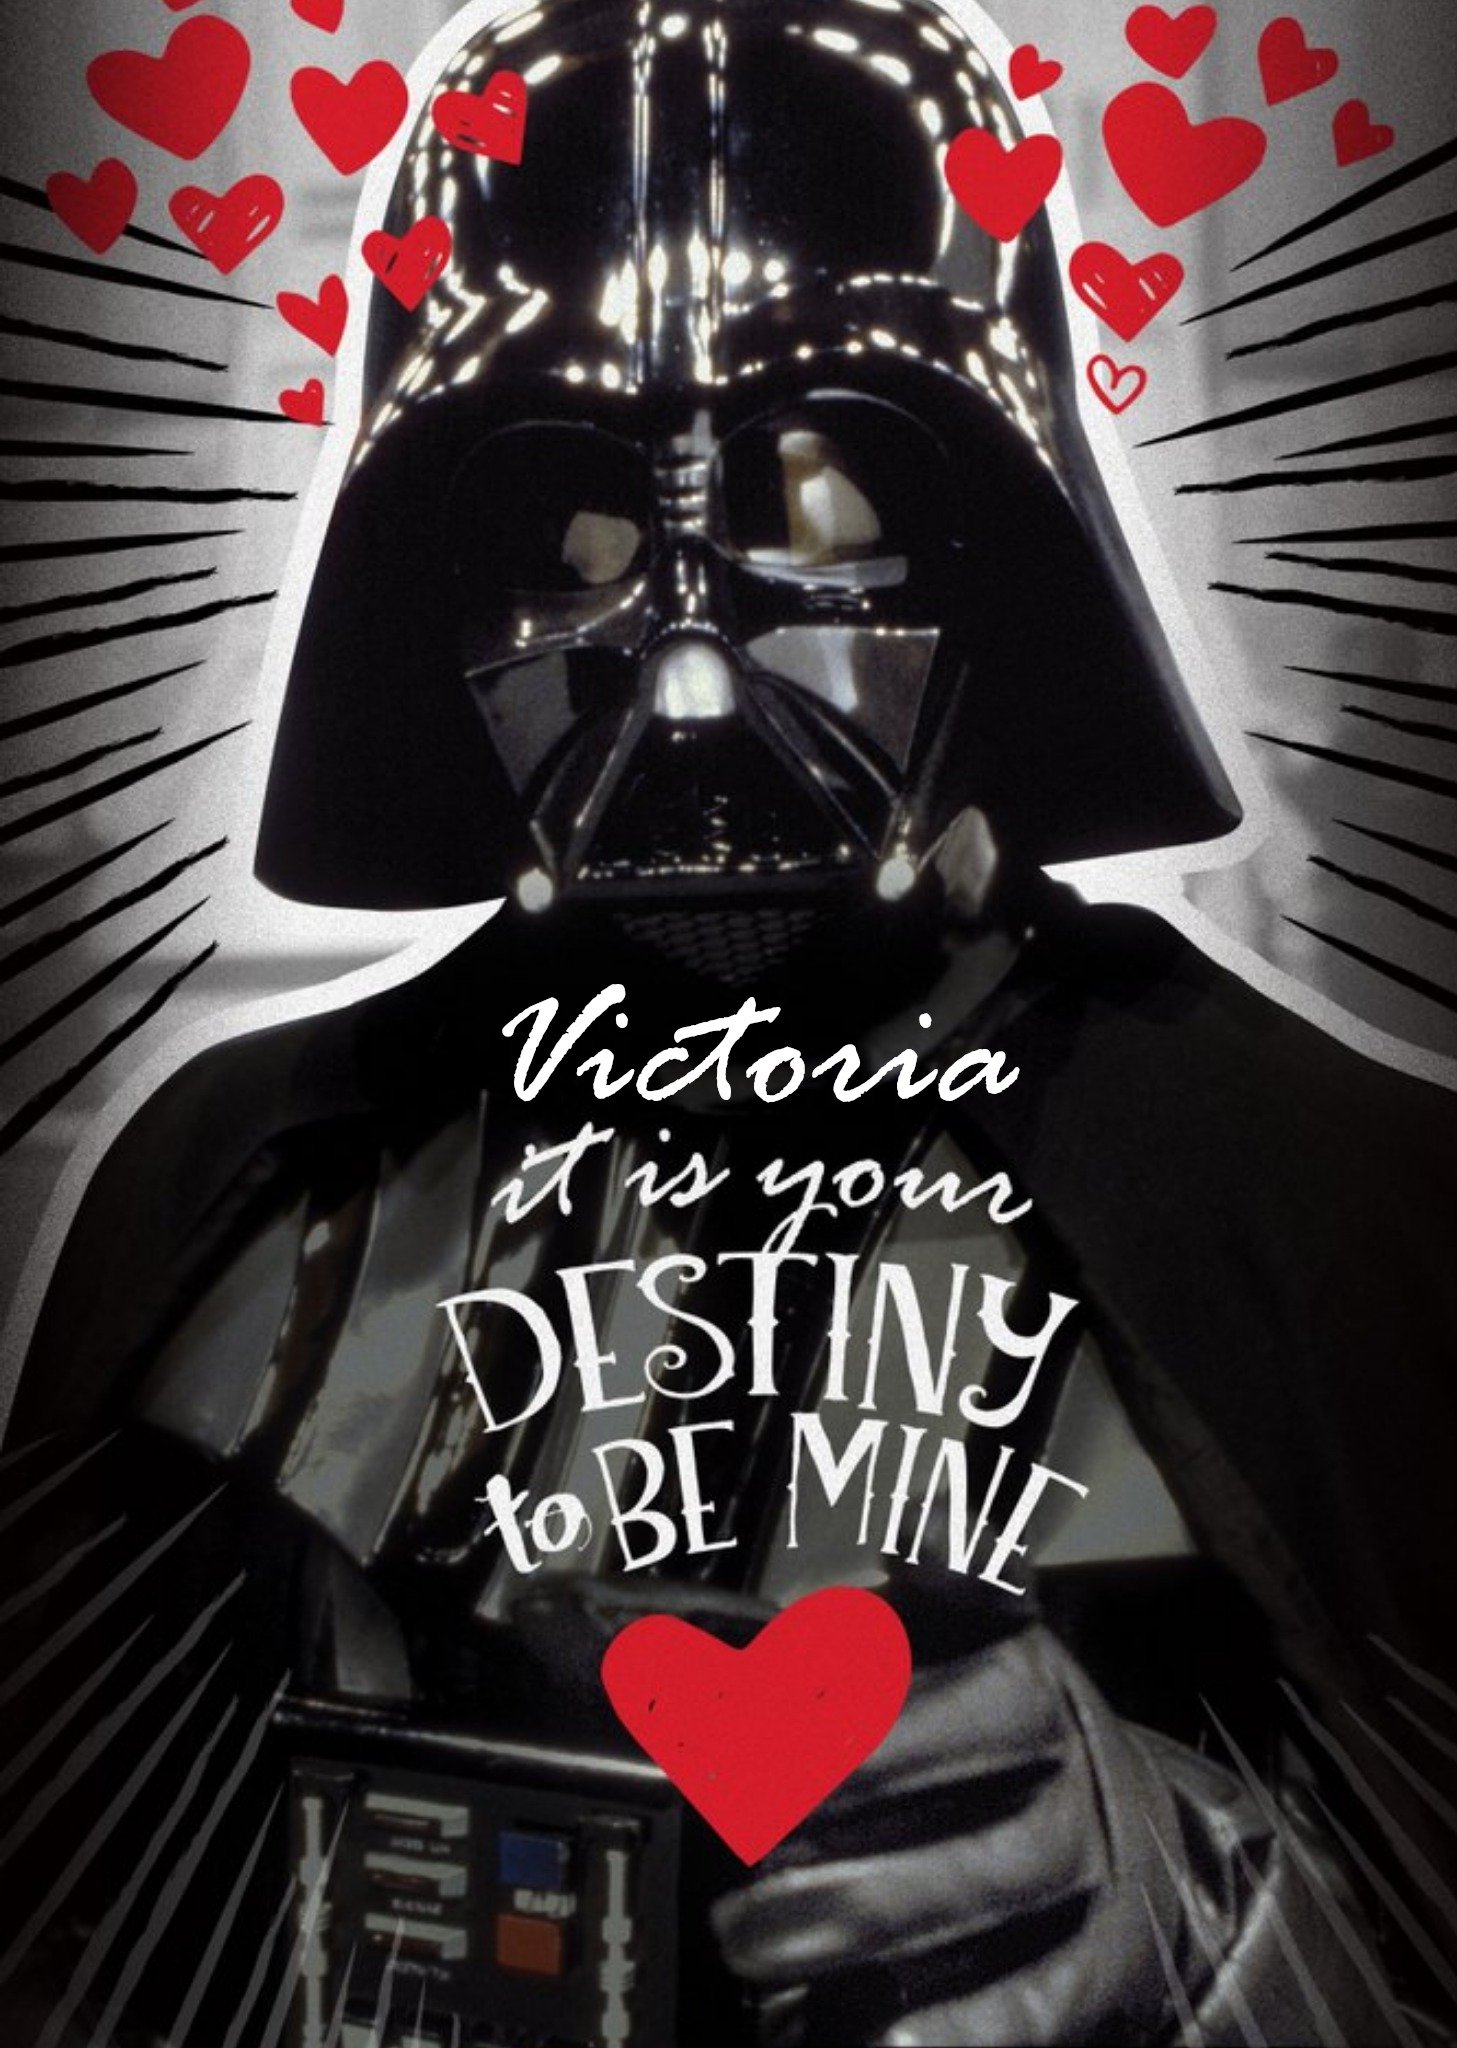 Disney Star Wars Valentine's Card - Darth Vader Ecard